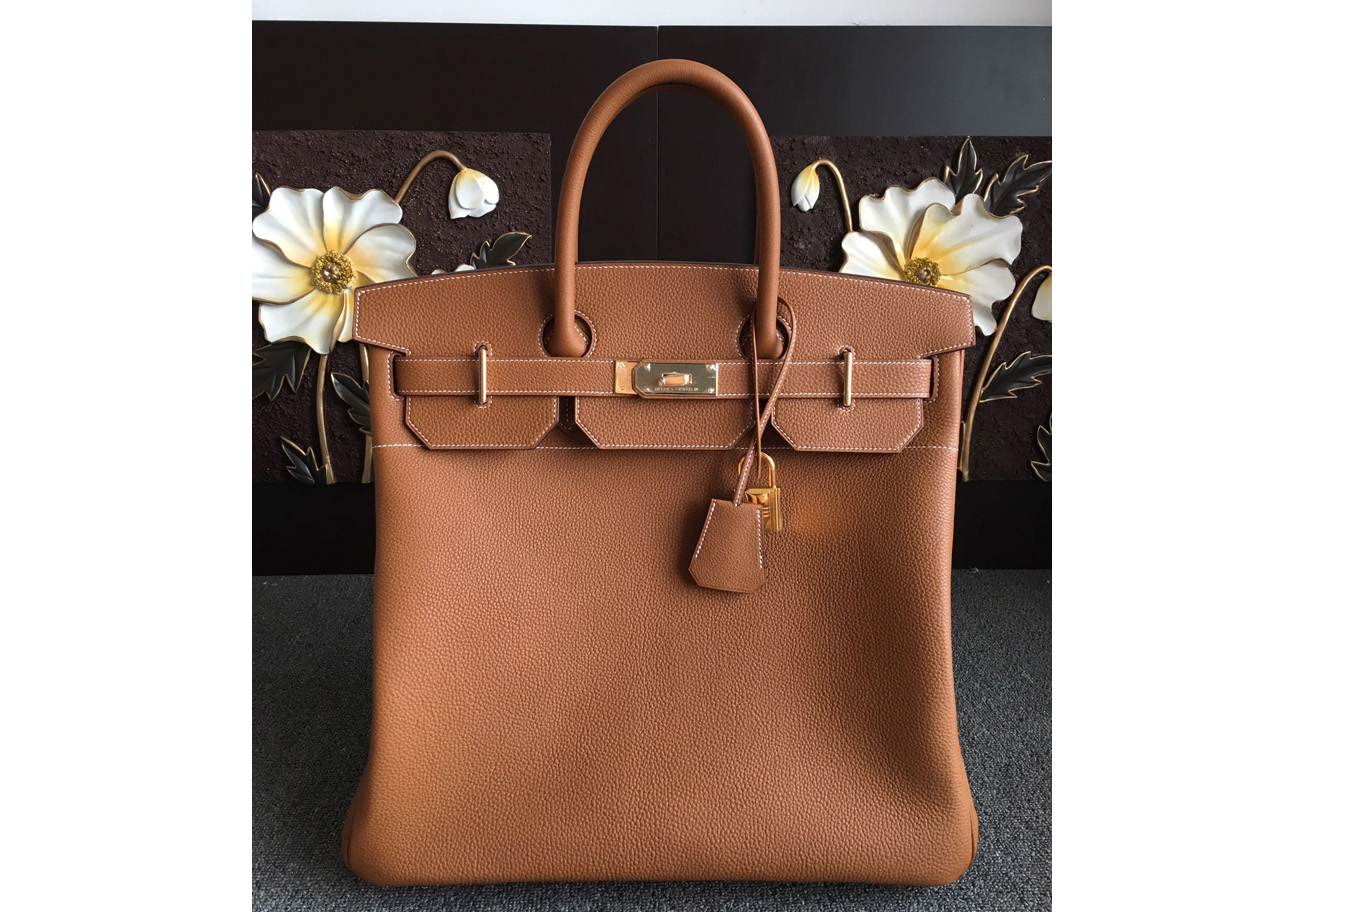 Hermes Sac Birkin HAC 40 Bag in Tan Togo Leather